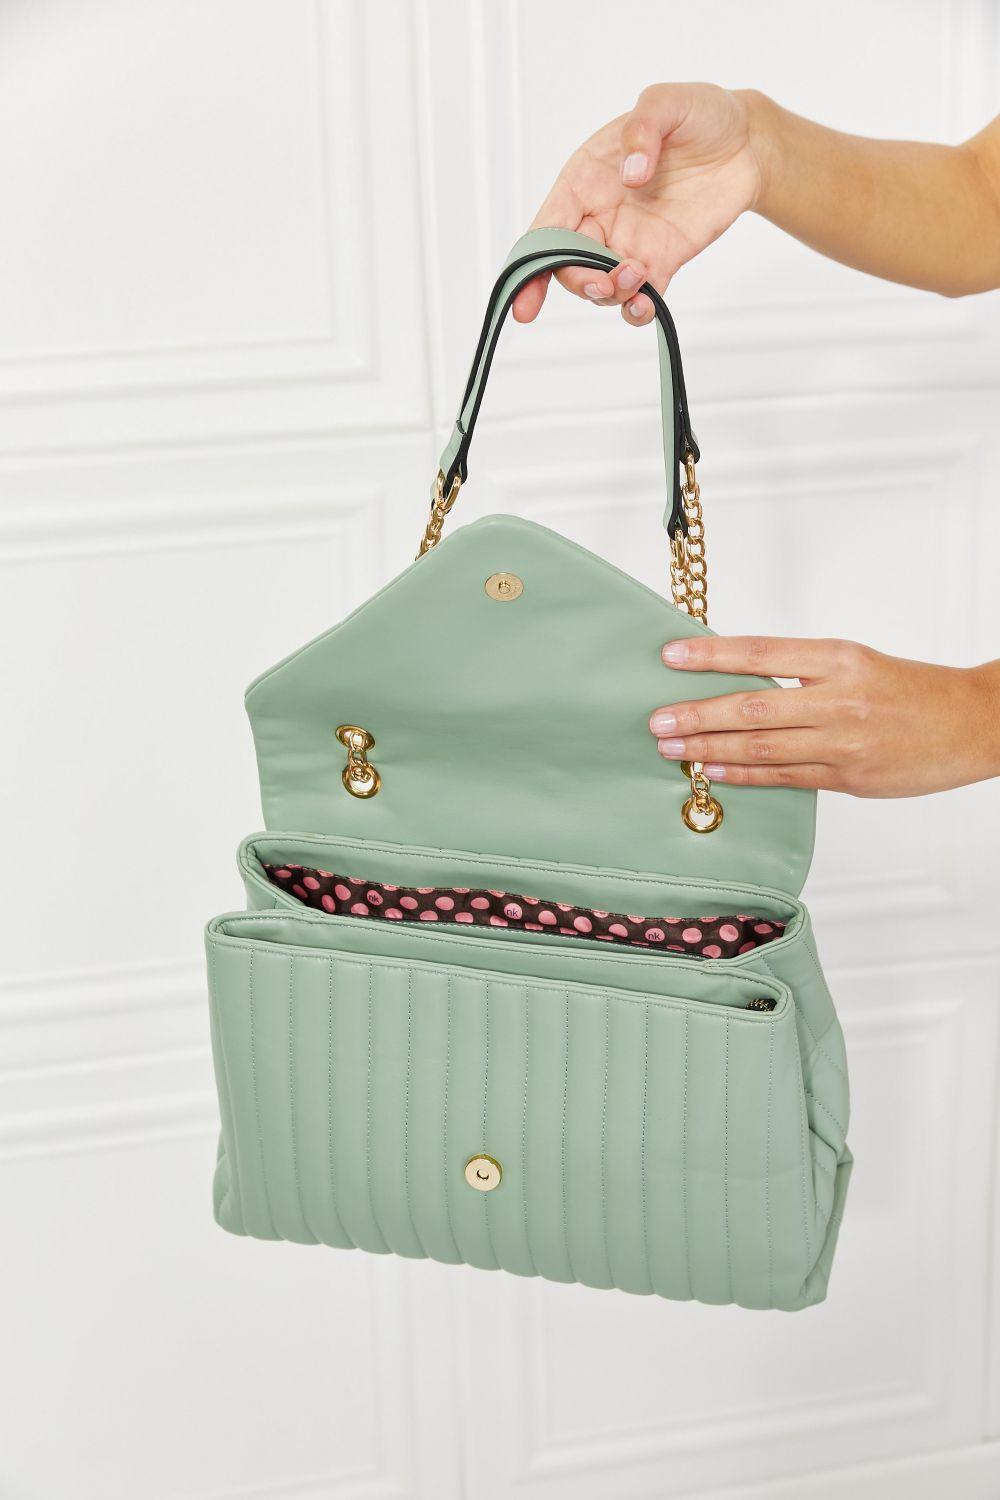 Nicole Lee USA A Nice Touch Handbag - Lab Fashion, Home & Health